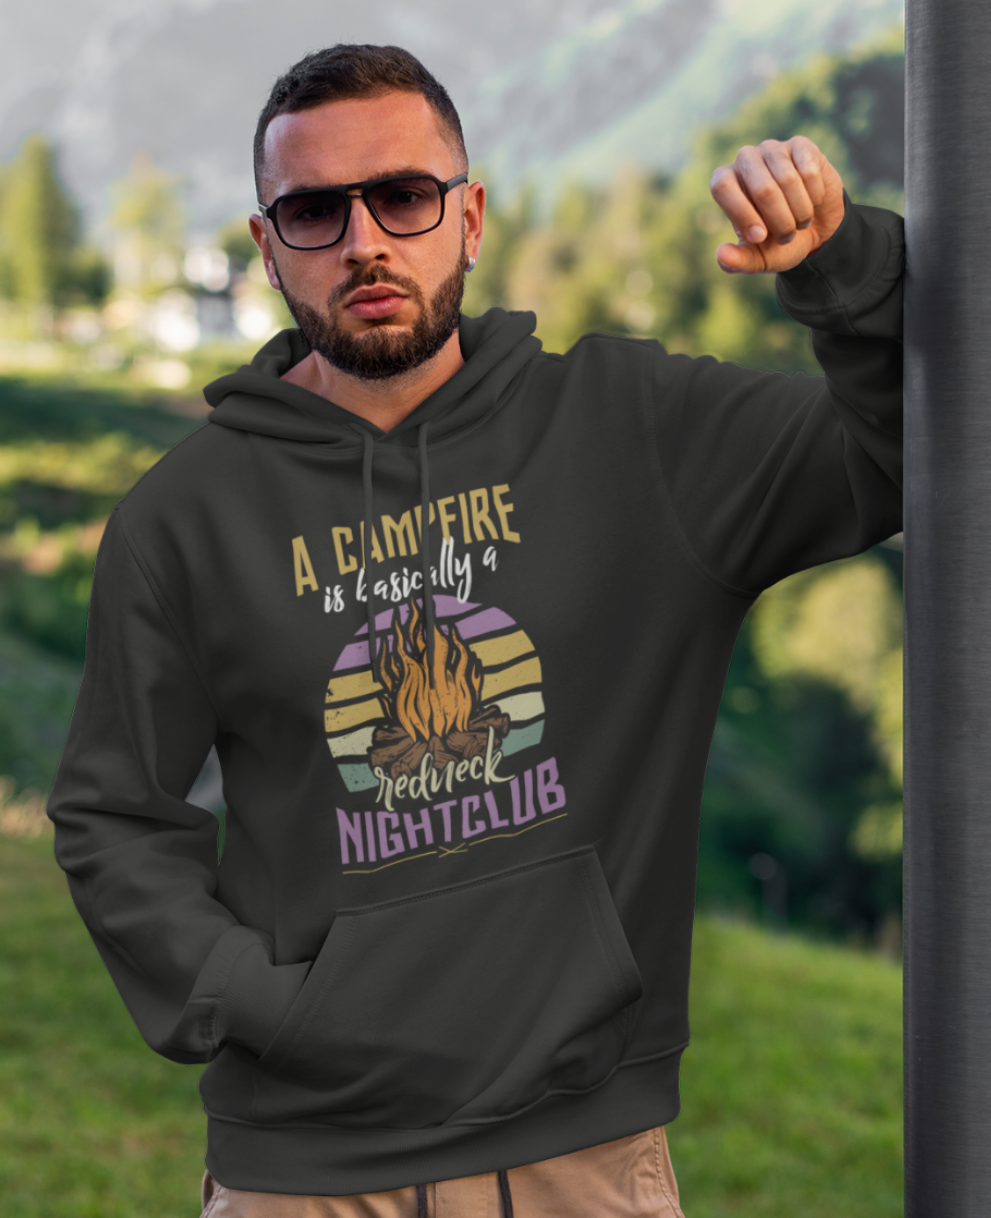 Campfire rednect night club; Pull-over hoodie sweatshirt